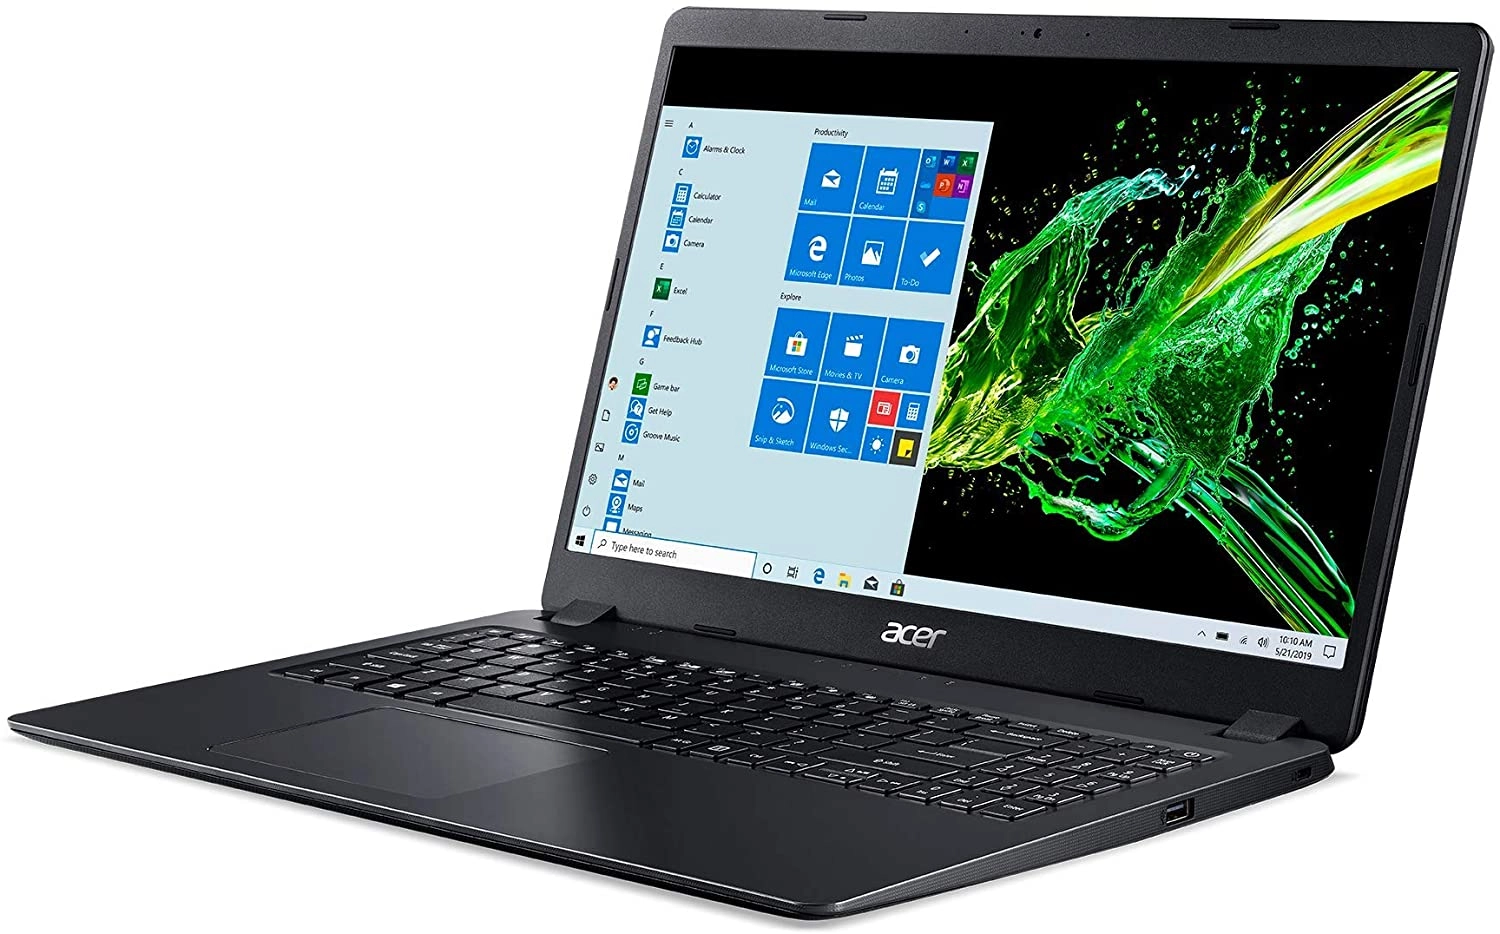 Acer A315-56 laptop image